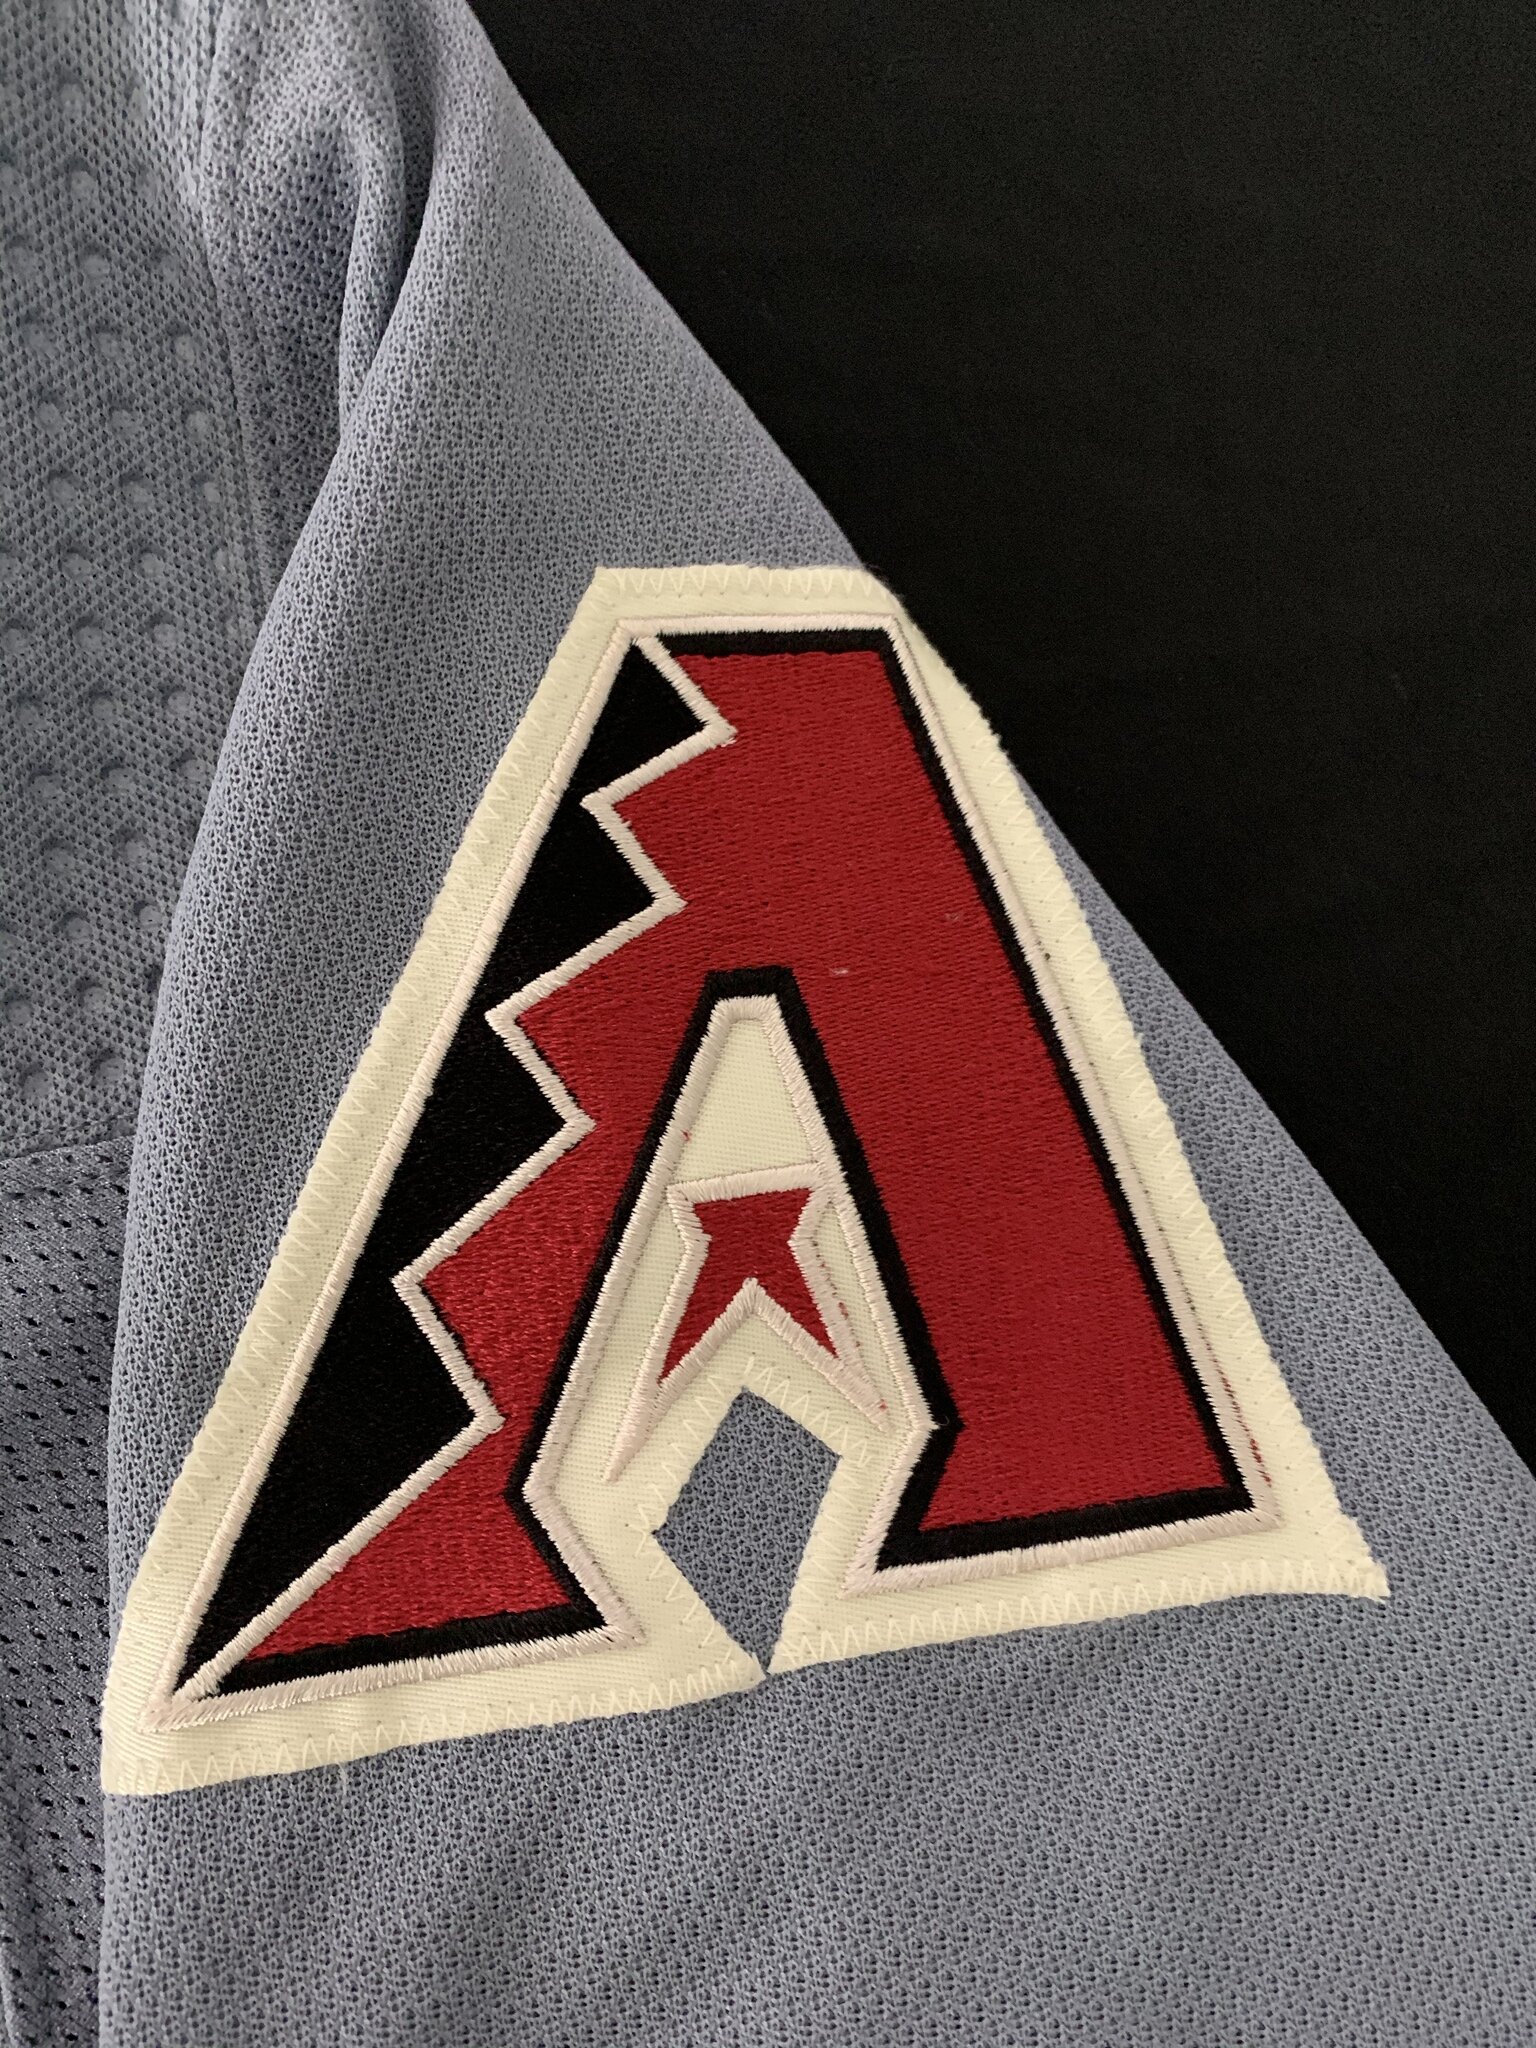 Clayton Keller 2020 Arizona Coyotes Diamondbacks Night Game Issued Jersey  — Desert Hockey Threads